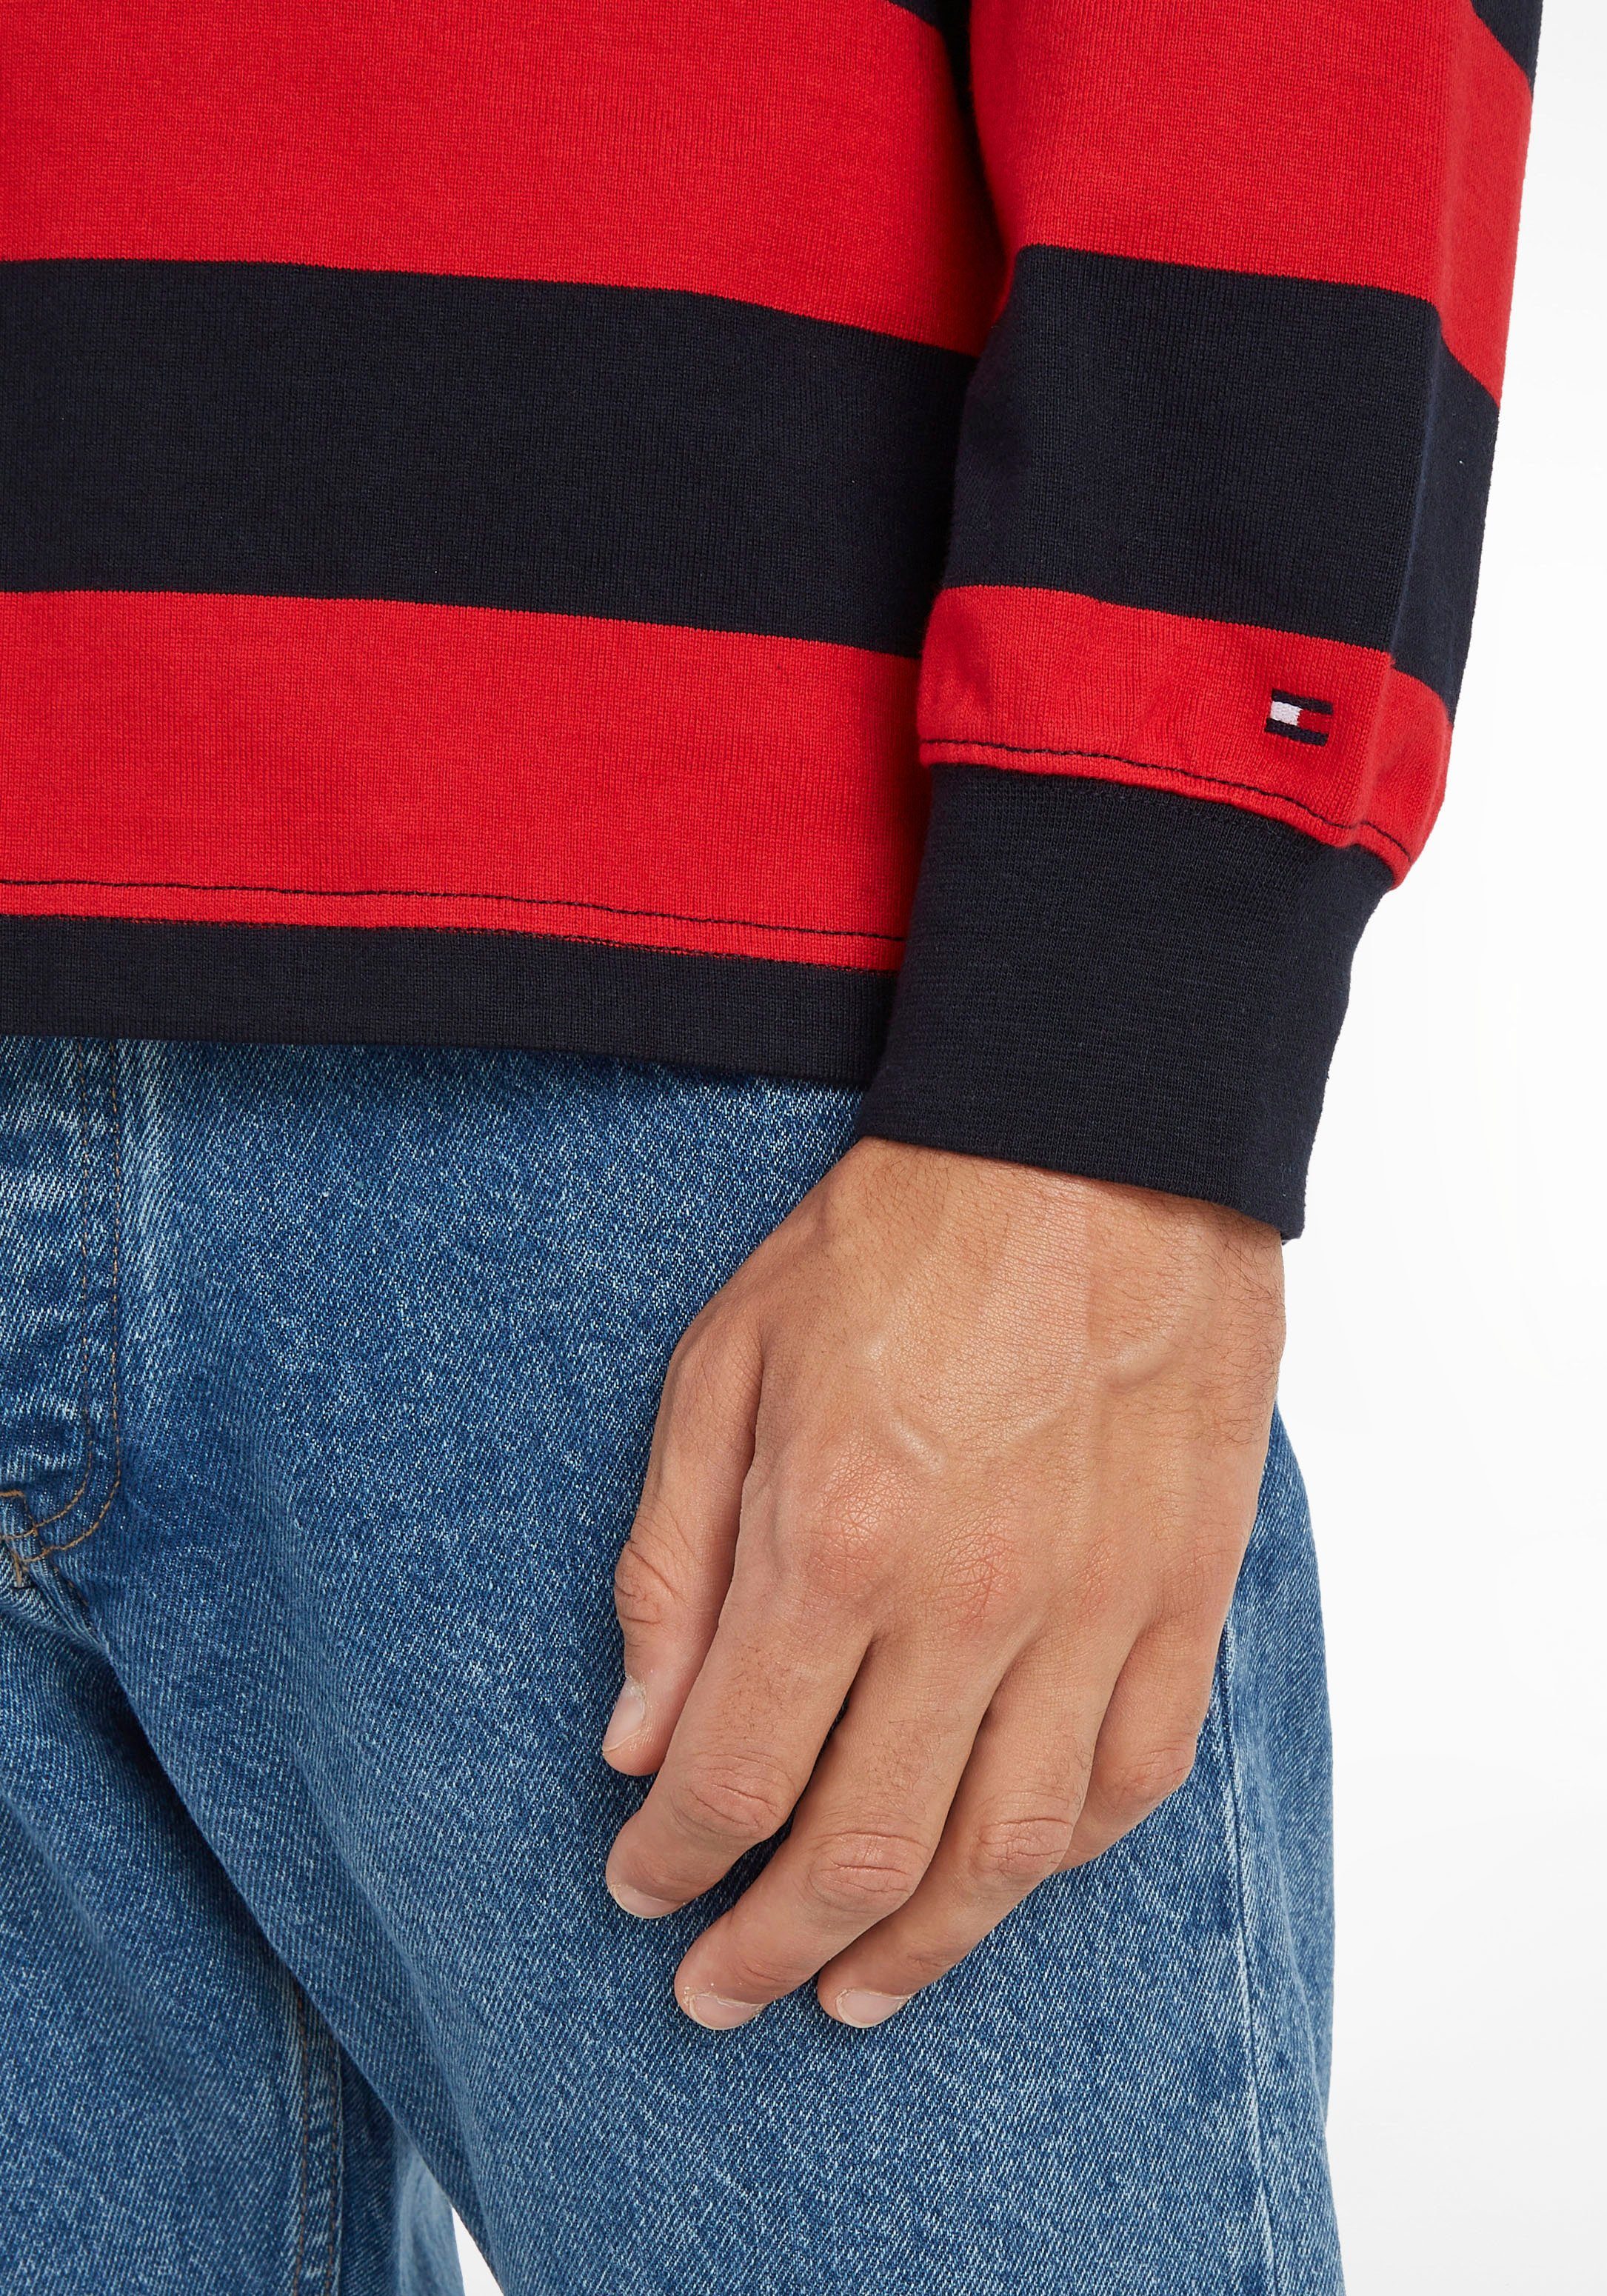 Tommy Hilfiger Primary BLOCK STRIPED Streifendesign Sky Sweater im RUGBY Red/Desert